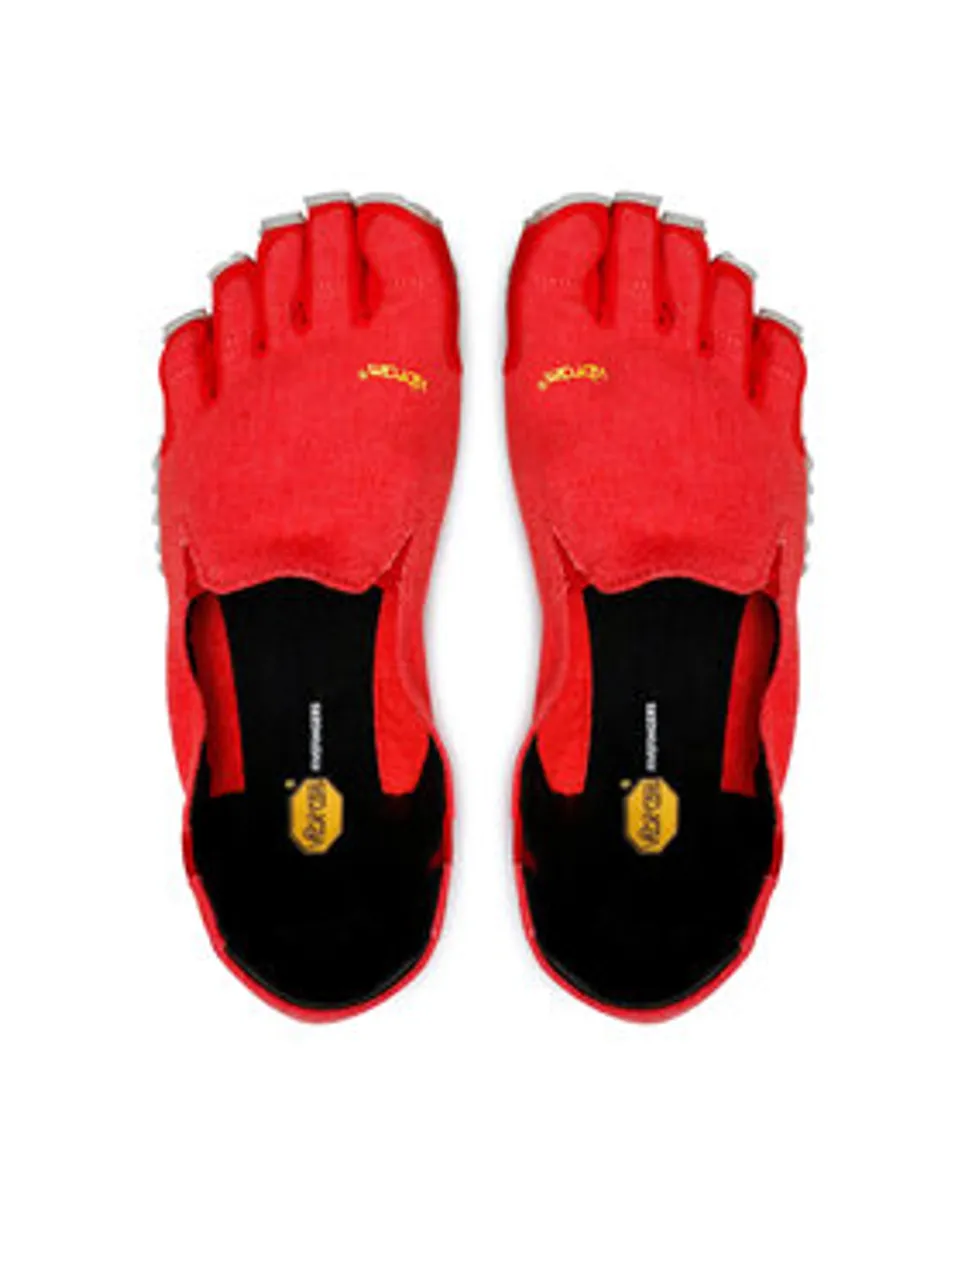 Vibram Fivefingers Schuhe Cvt Lb 21M9901 Rot